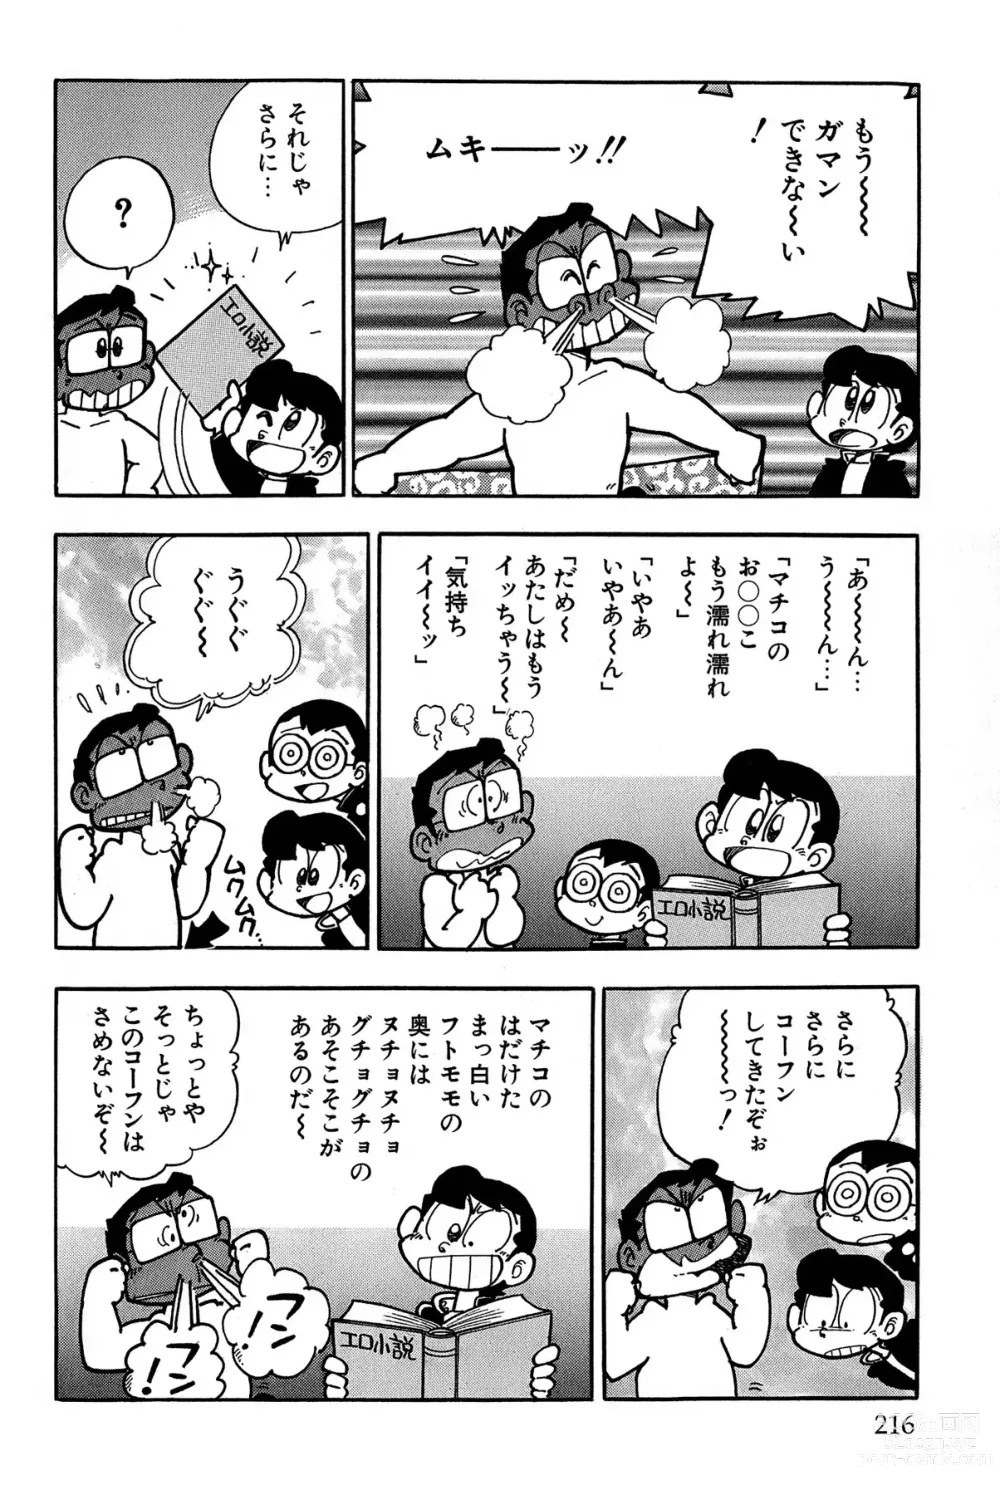 Page 220 of manga Maichiingu Machiko Sensei book pink